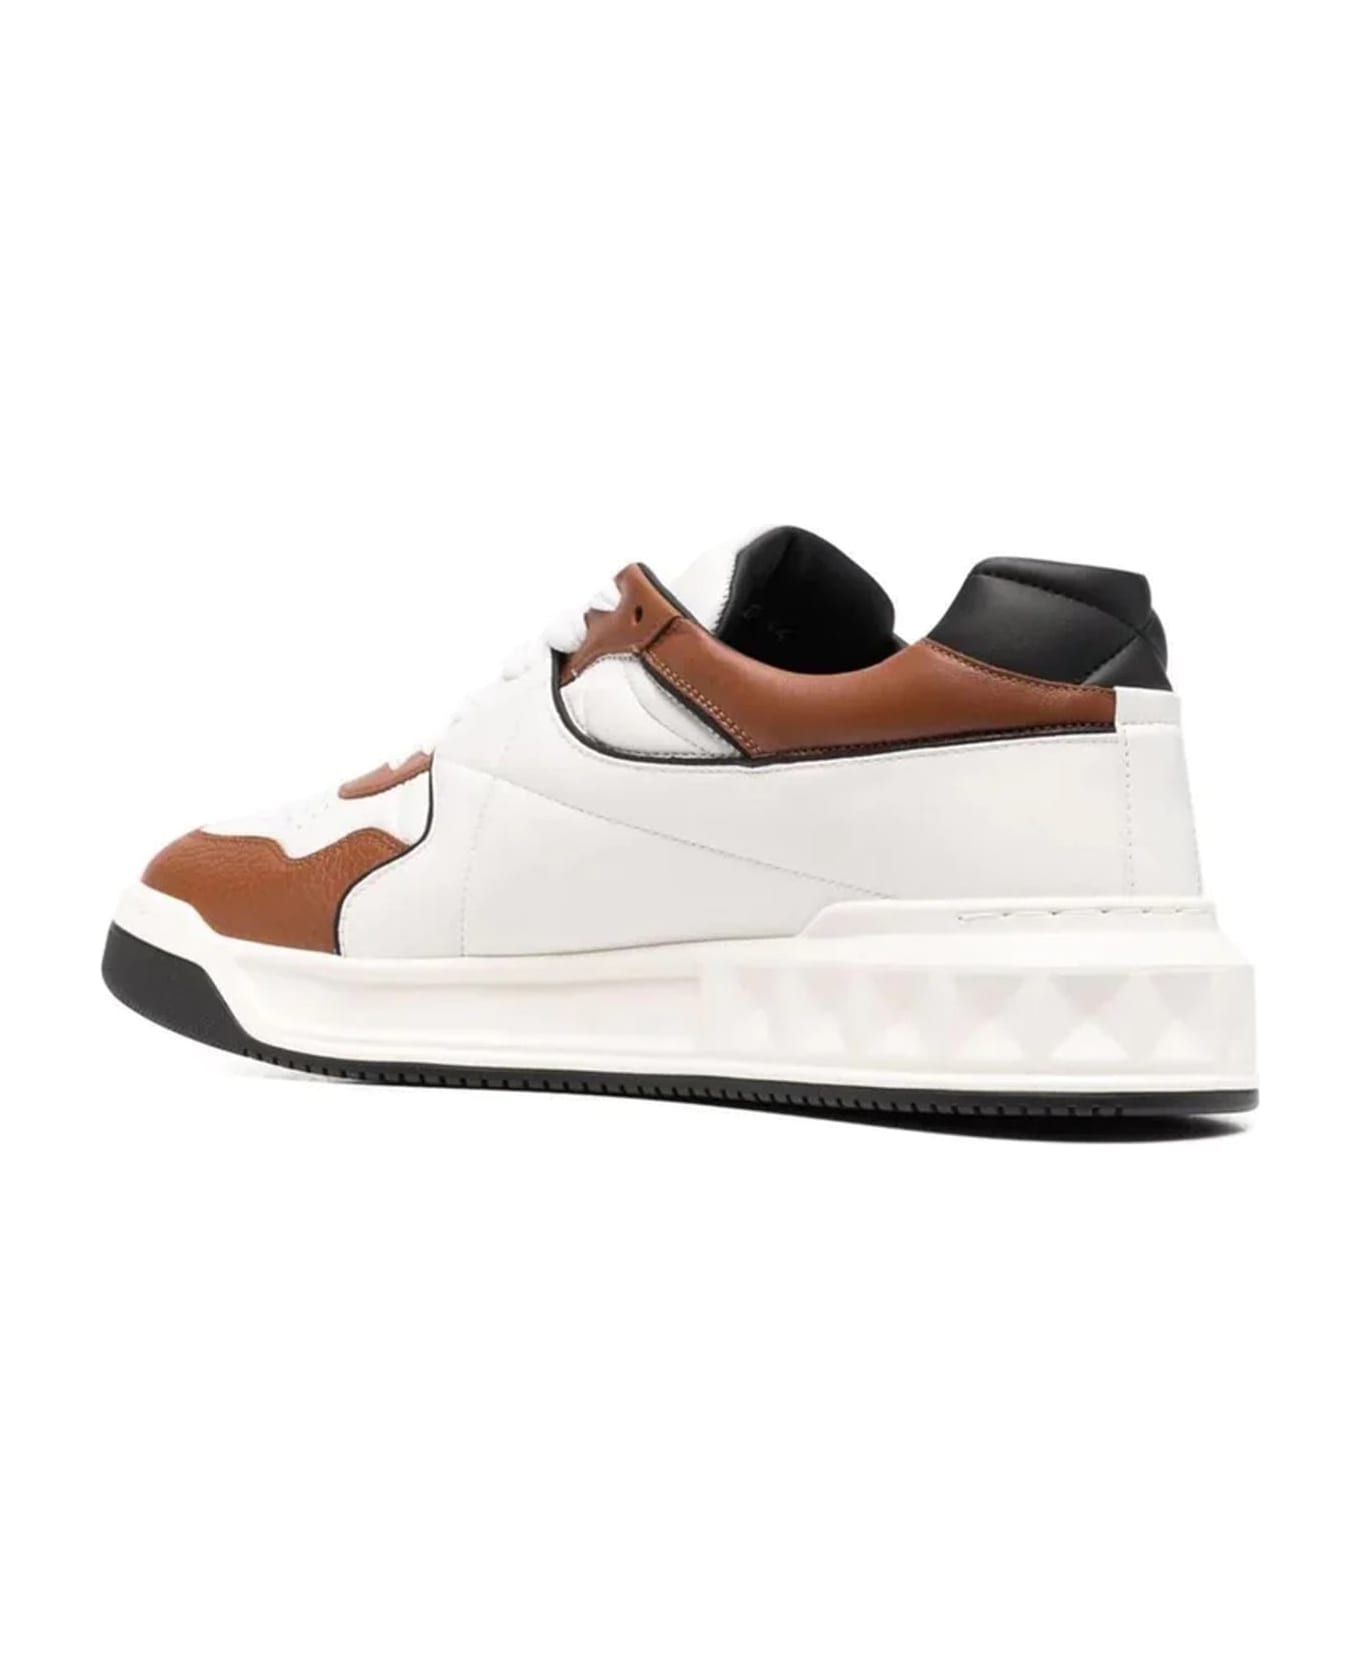 Valentino Garavani Garavani One Stud Leather Sneakers - White